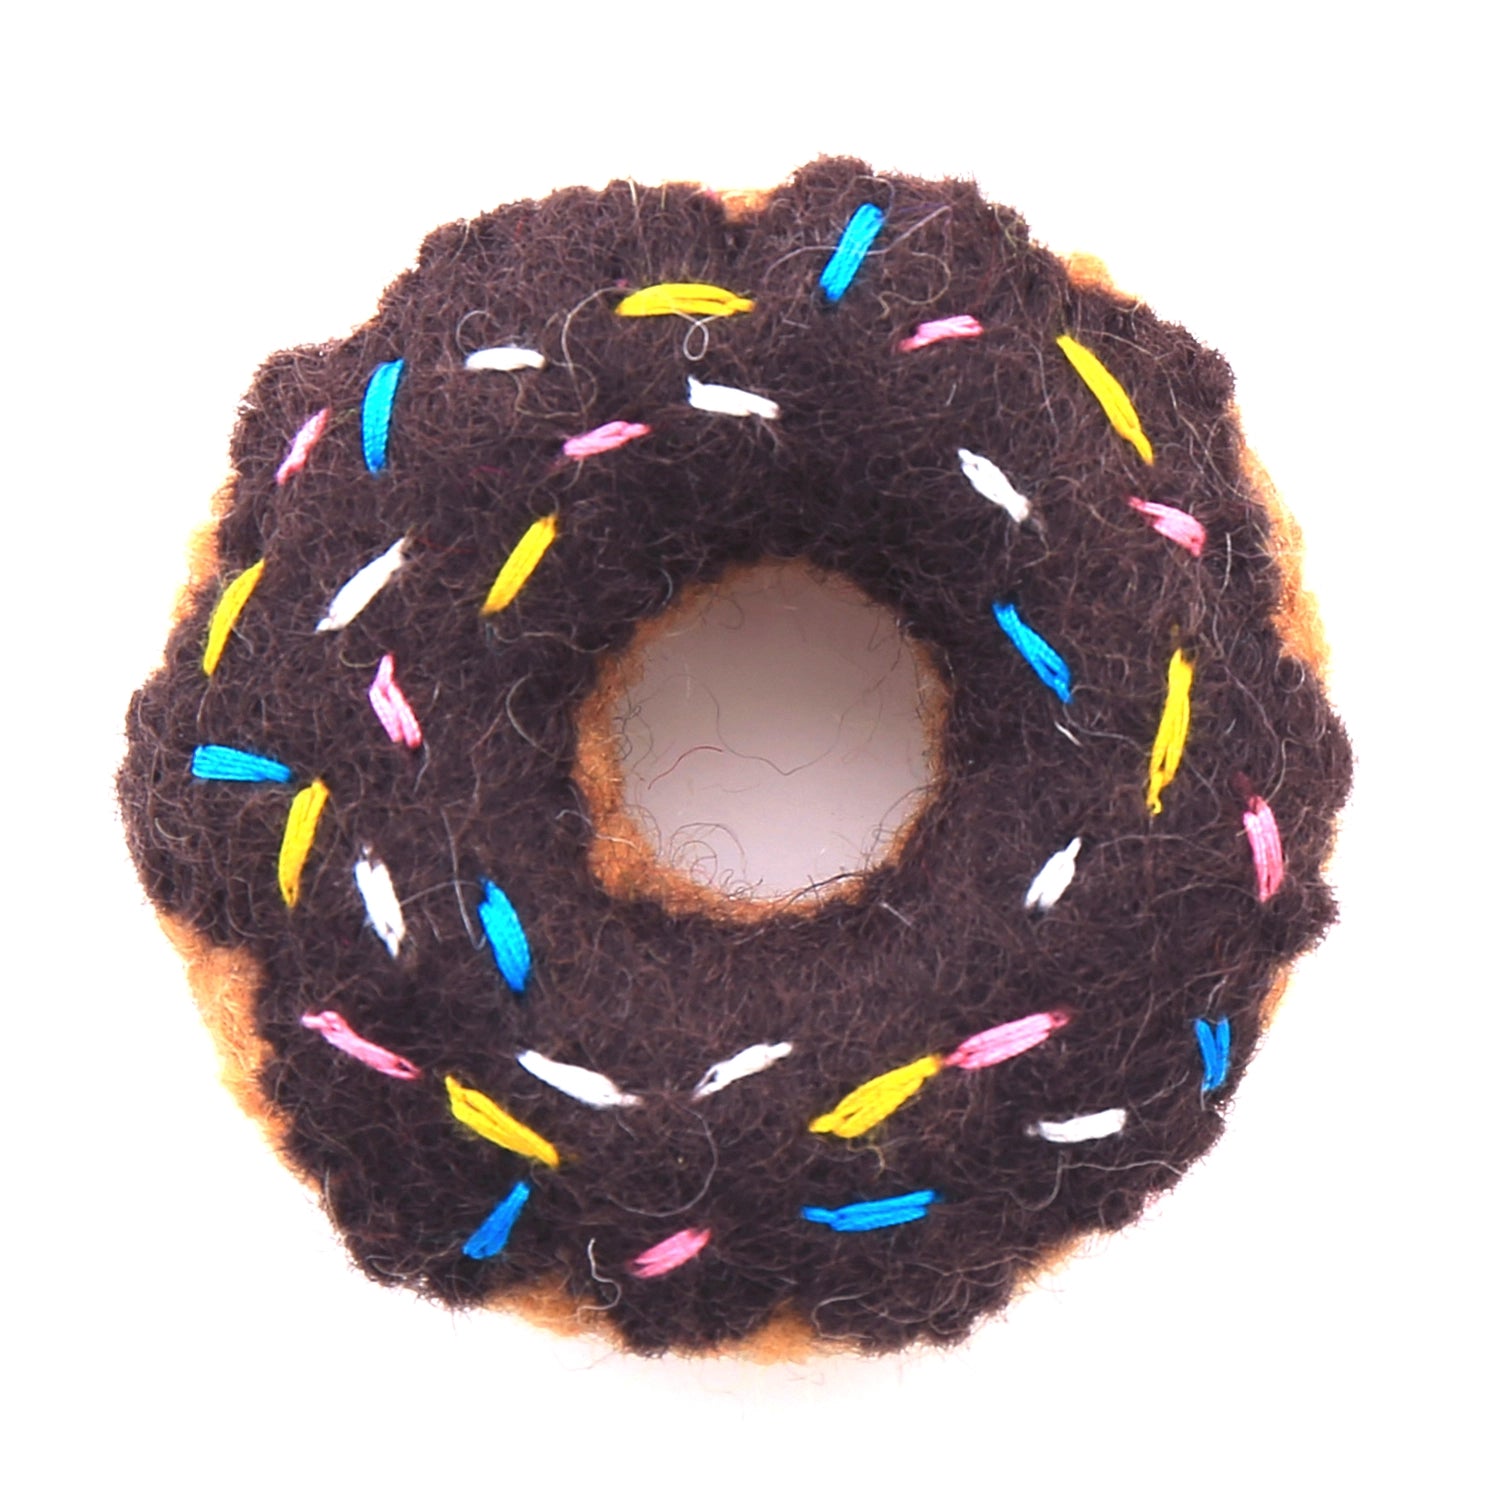 The Foggy Dog - Cat Toy Donut